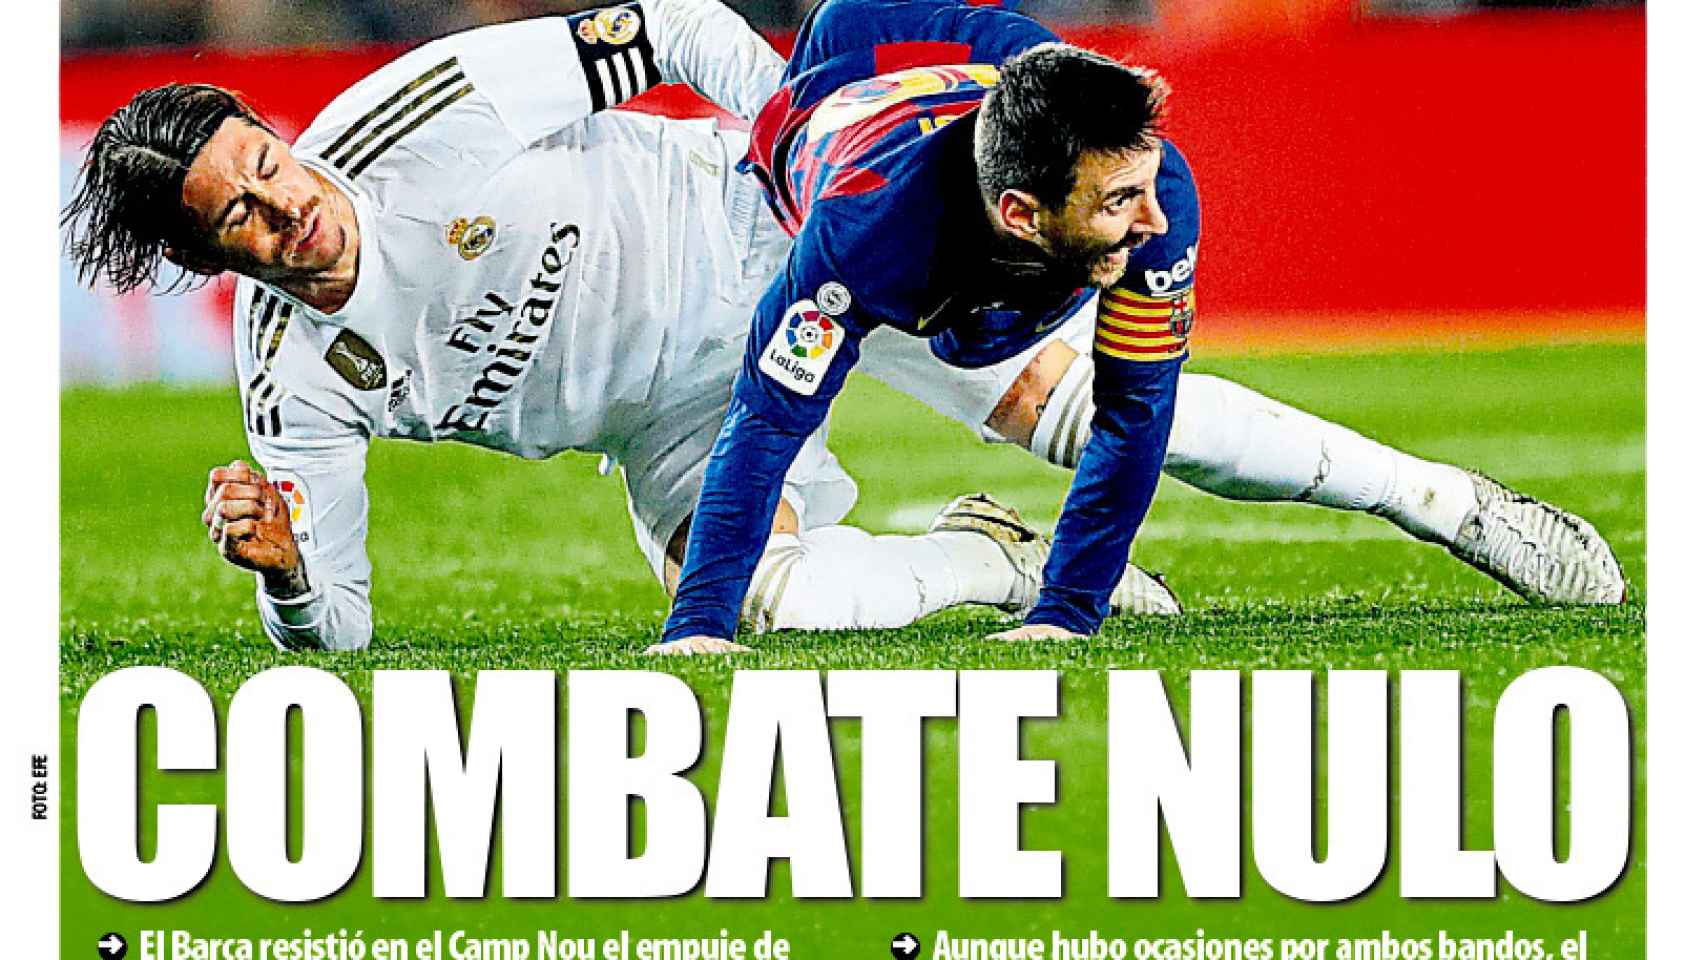 La portada del diario Mundo Deportivo (19/12/2019)1706 x 960